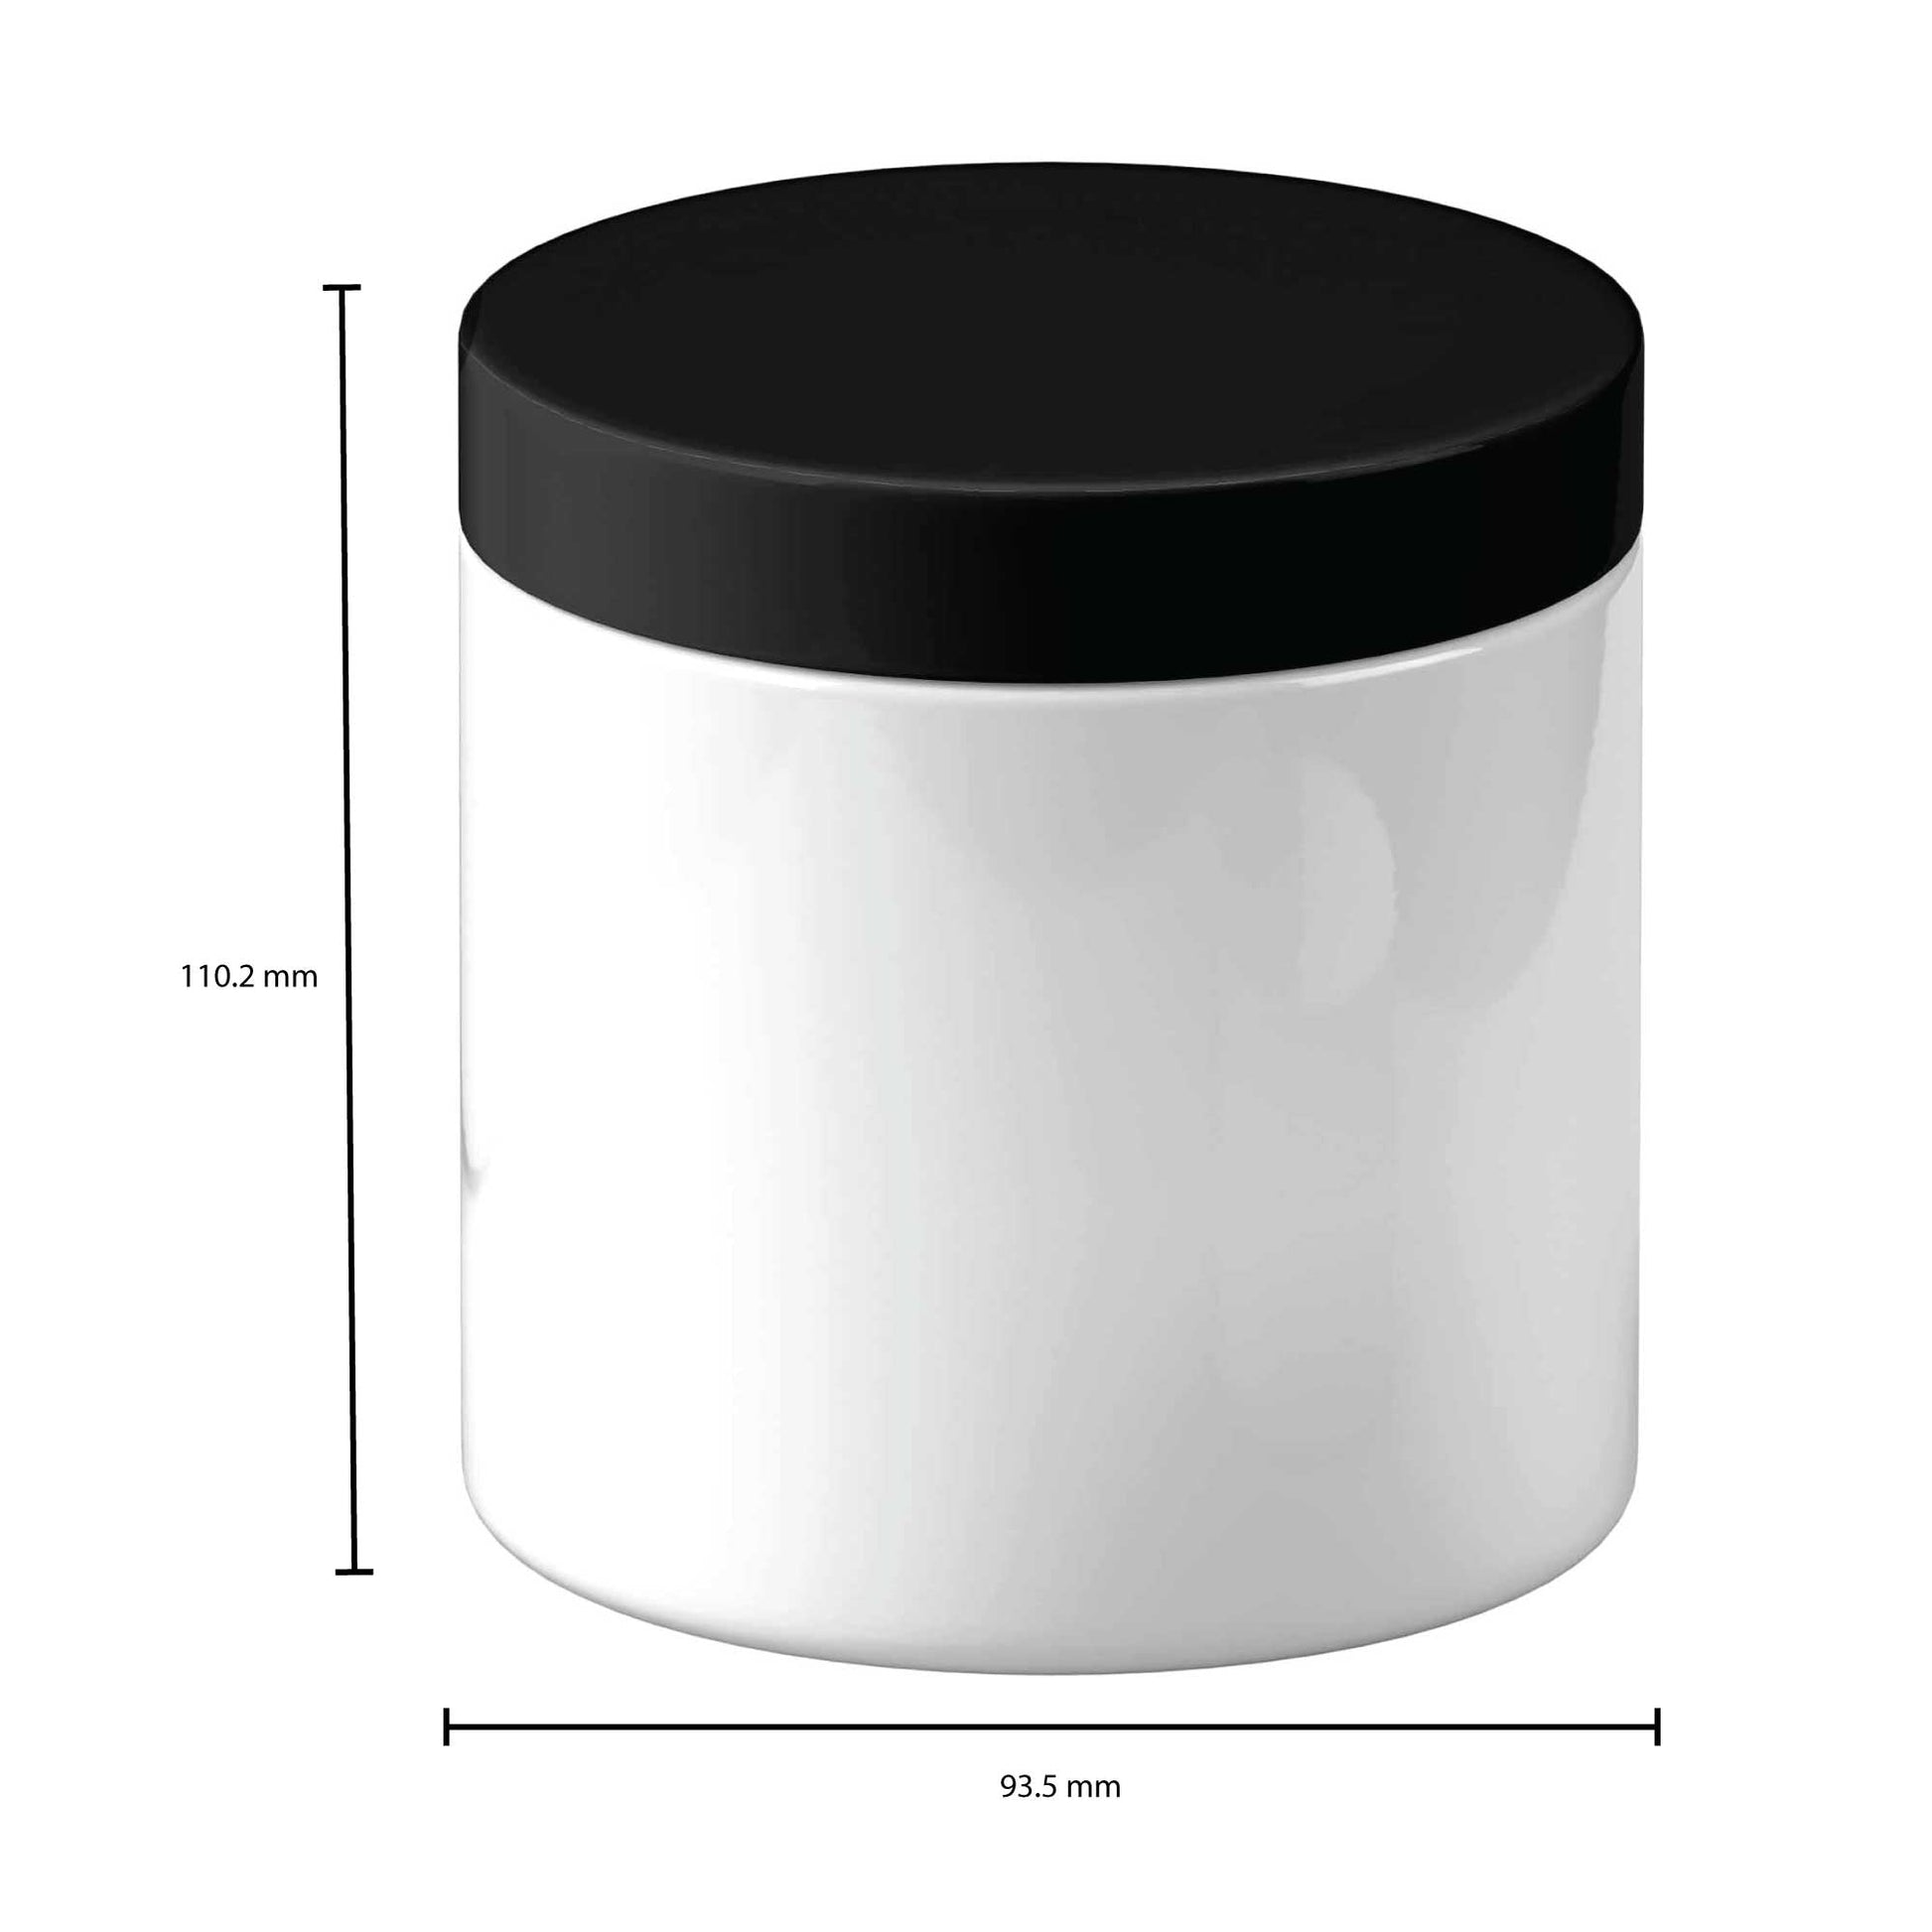 5x 600g Plastic Cosmetic Jar + Lids - Empty White Cream Container